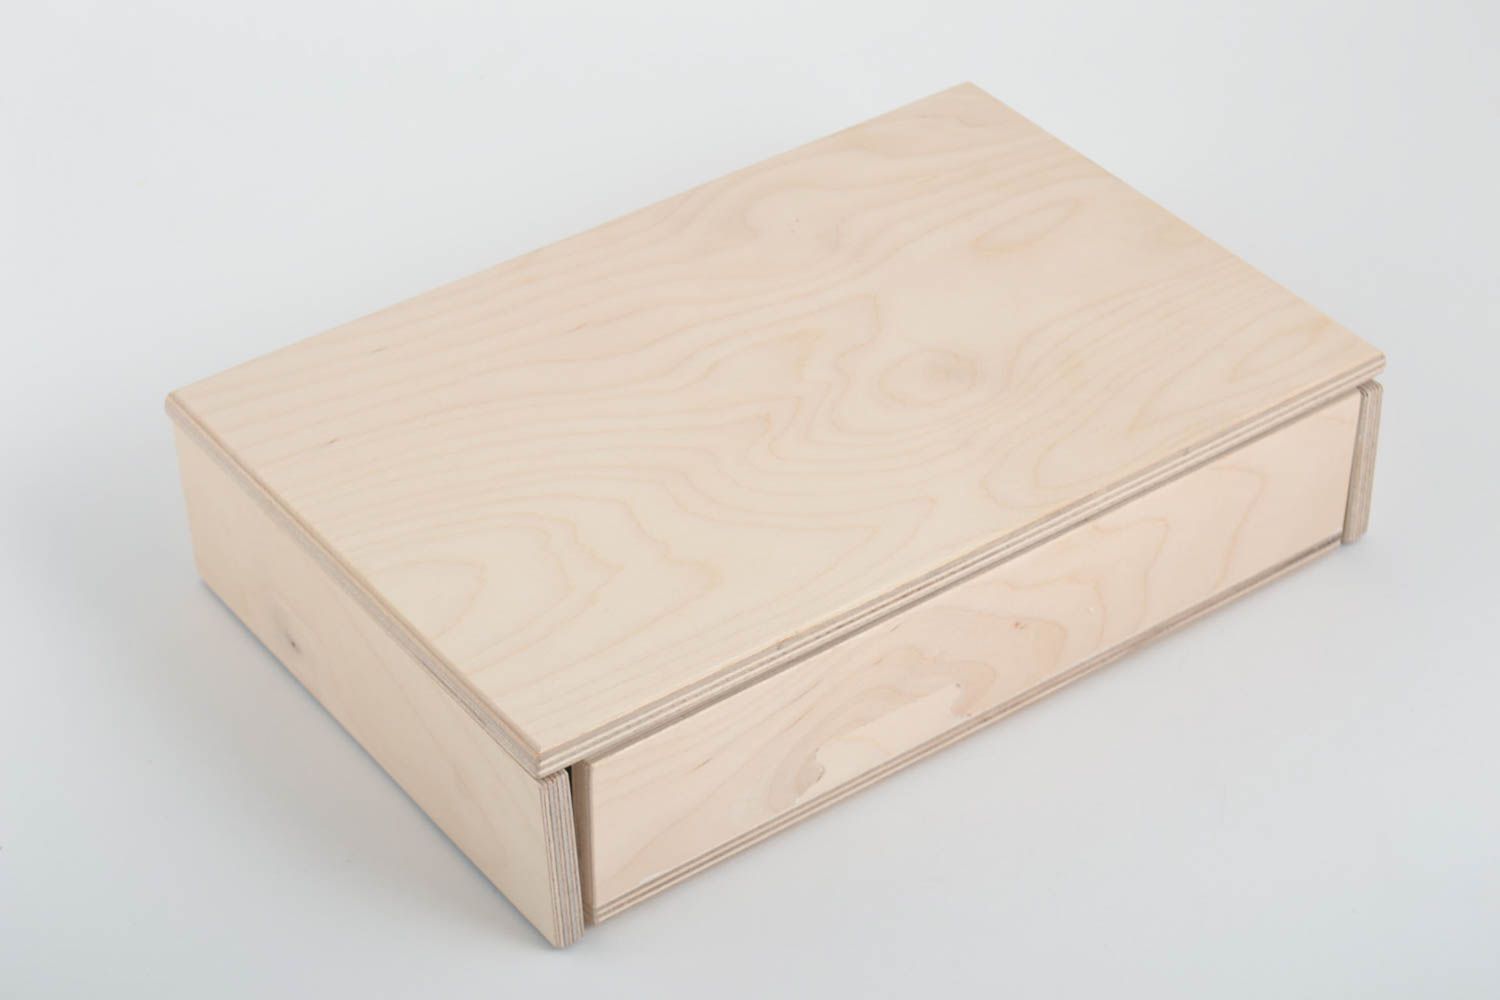 Unusual handmade diy wooden blank box decoupage ideas creative work ideas photo 1